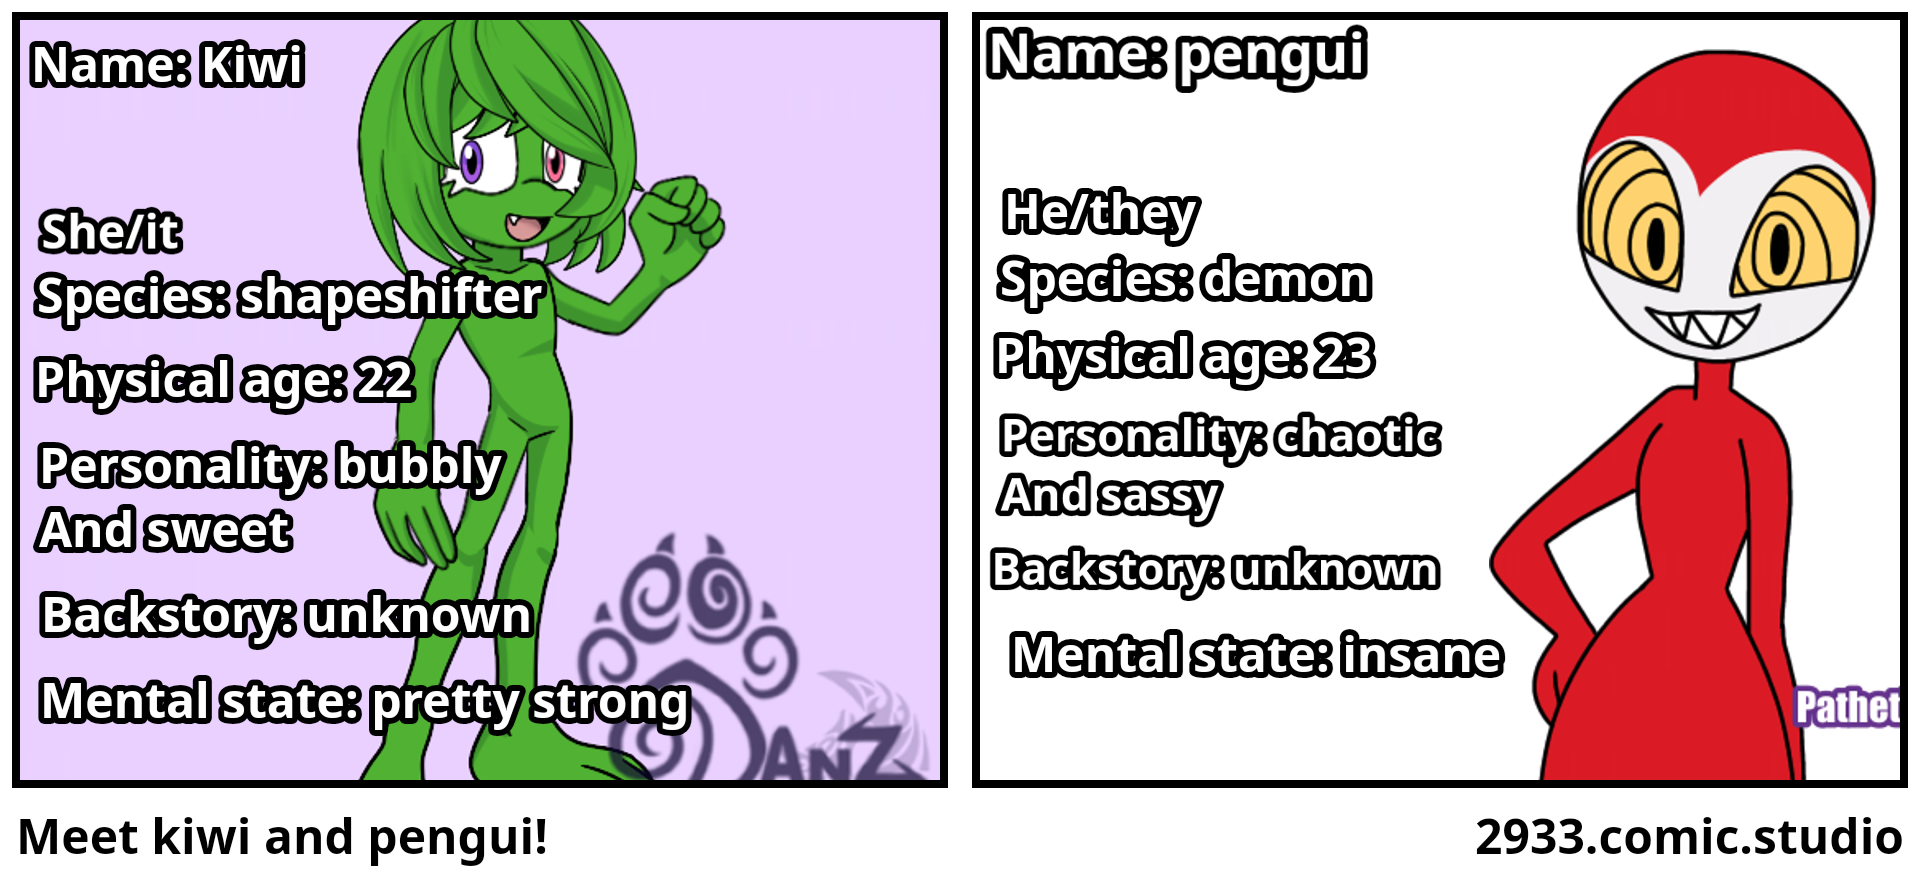 Meet kiwi and pengui!